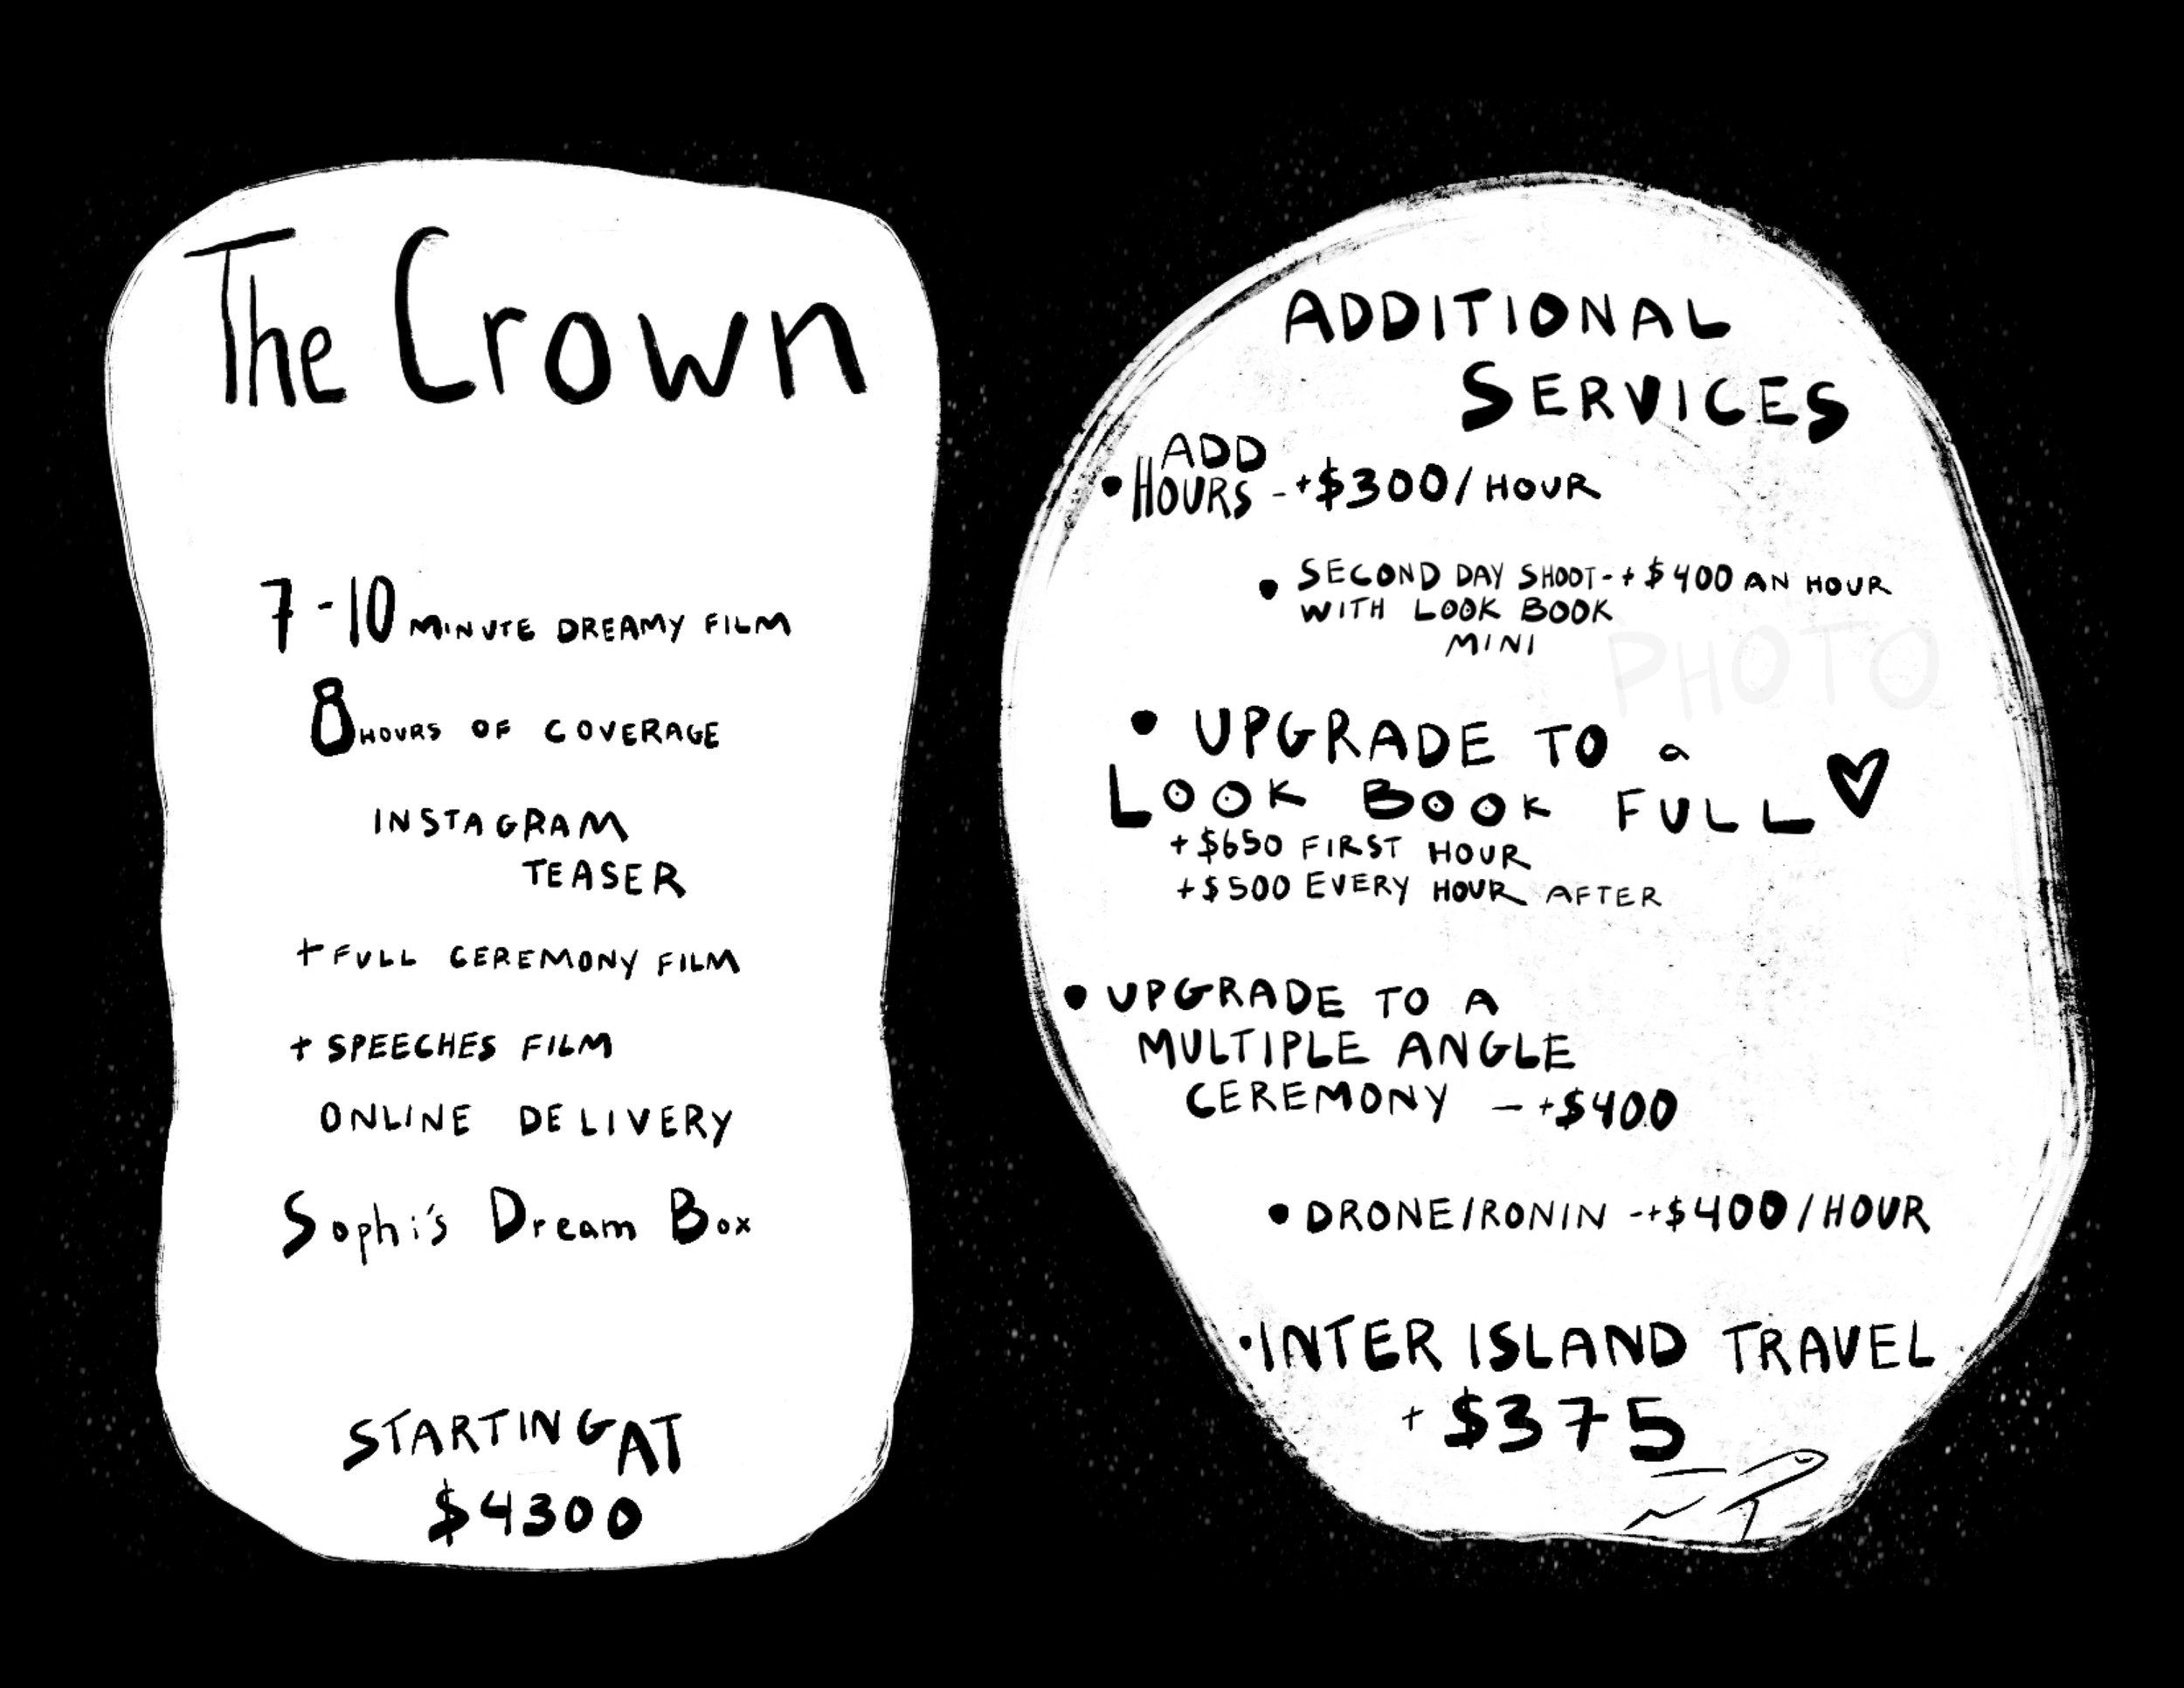 the crown jpeg.jpg